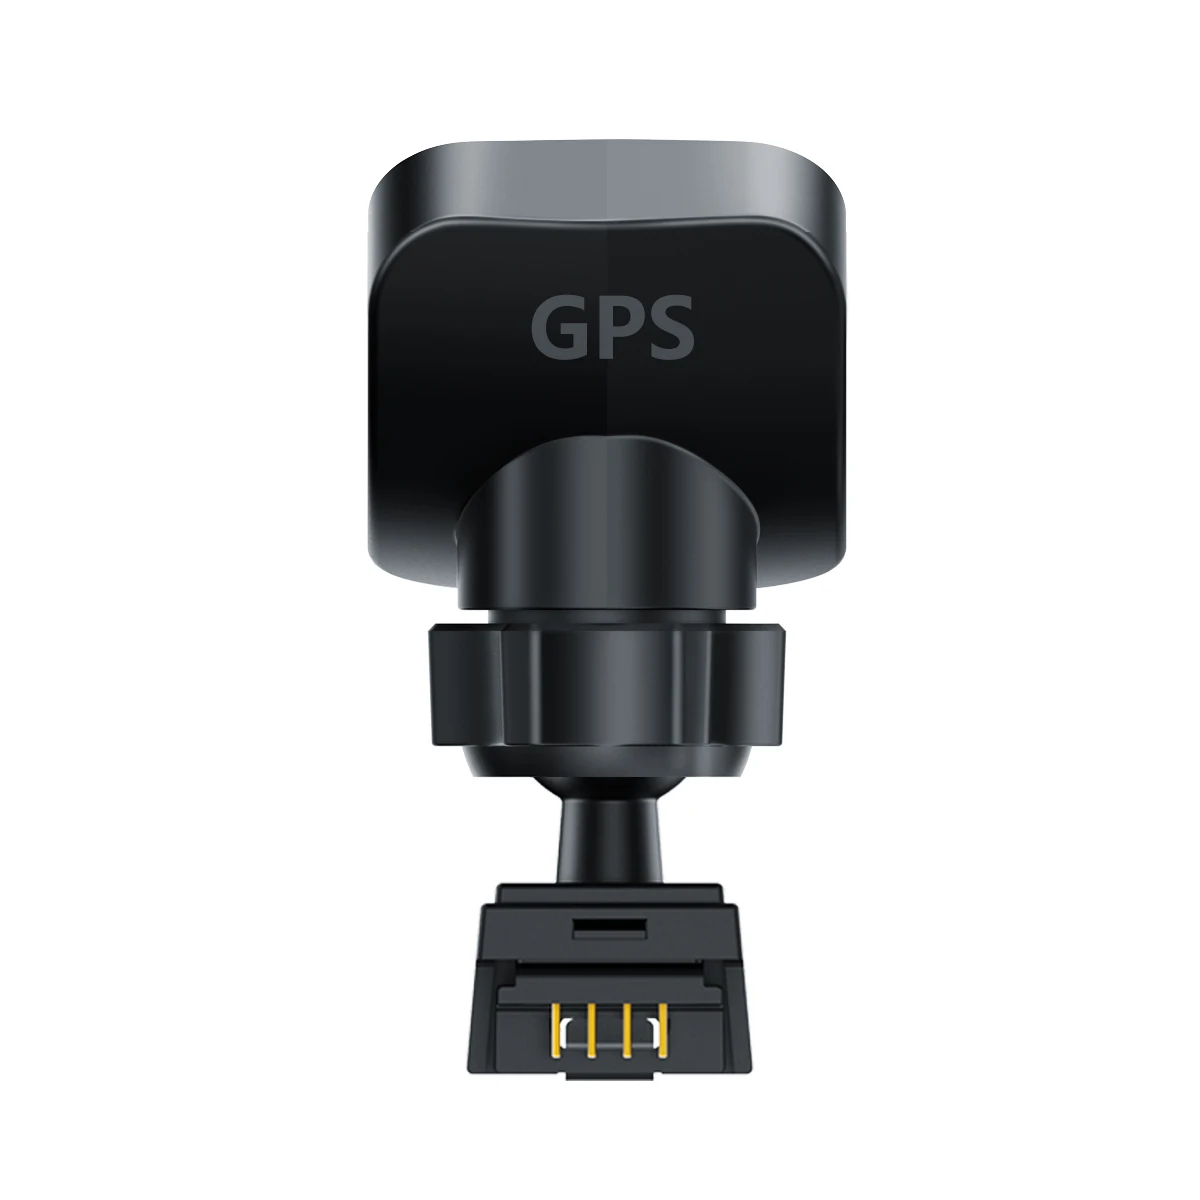 Vantrue N4, N2S, X4S, T3 Dash Cam GPS Receiver Module Type C USB Port Adhesive Mount for Windows and Mac